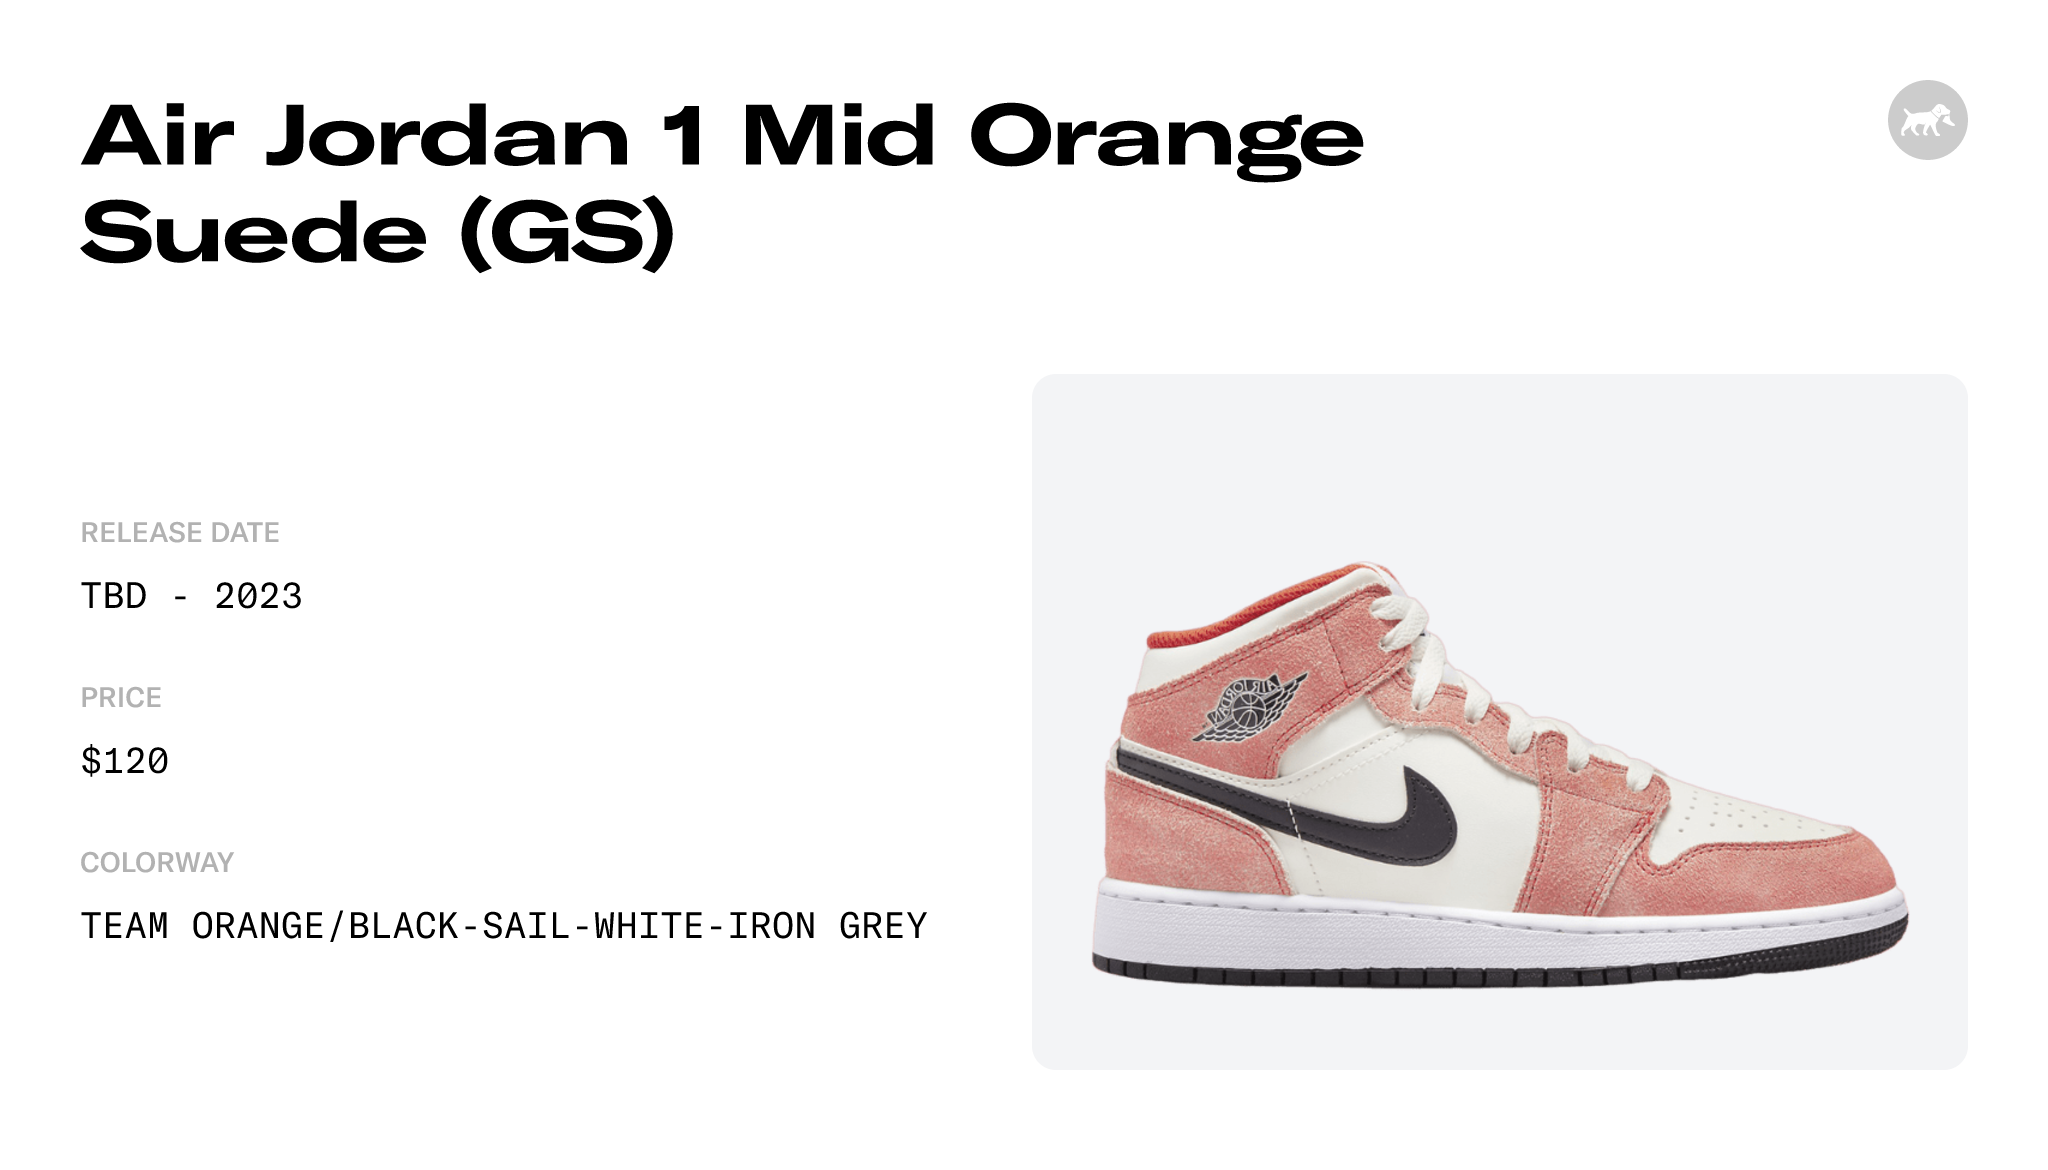 Air Jordan 1 Mid Orange Suede (GS) - DV1336-800 Raffles and Release Date